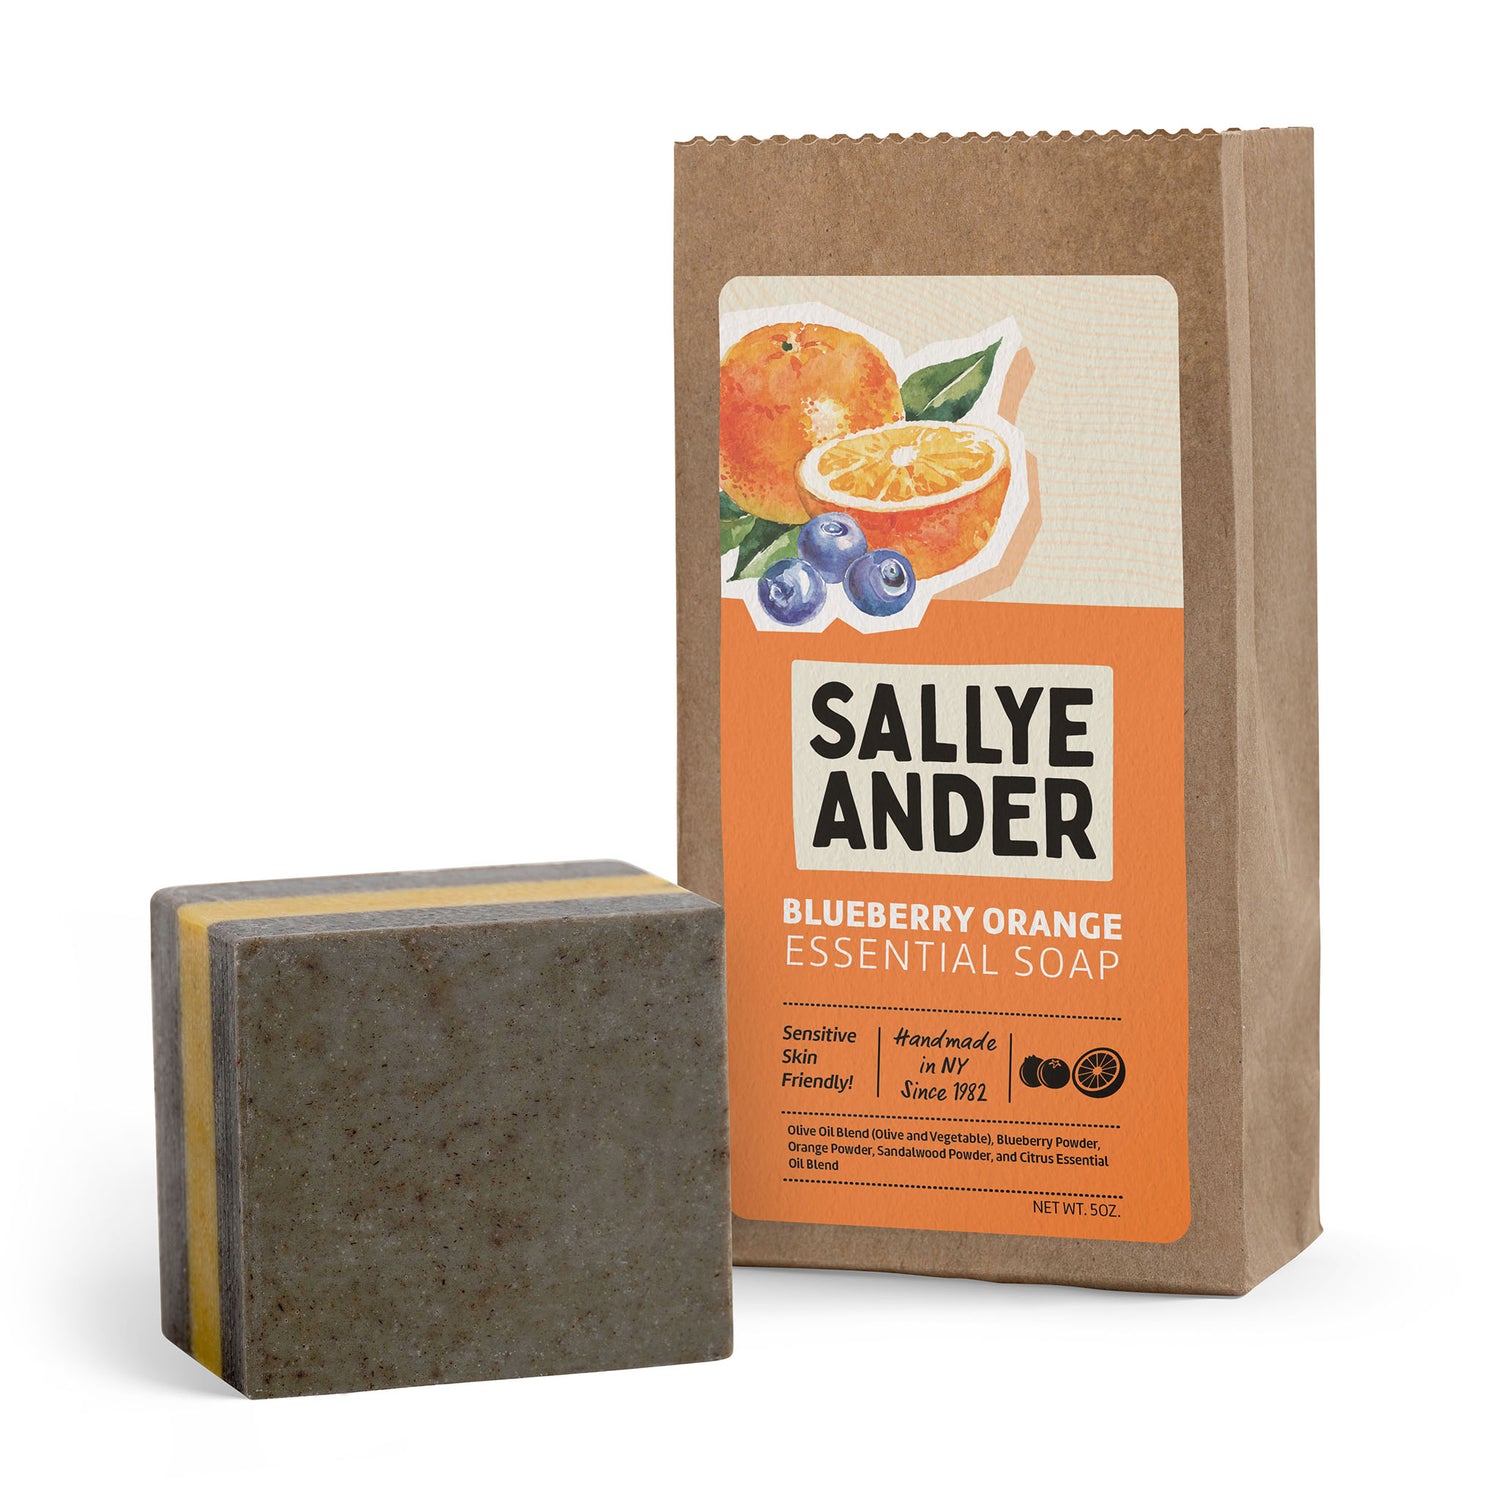 Honey + Beeswax Soap – SallyeAnder